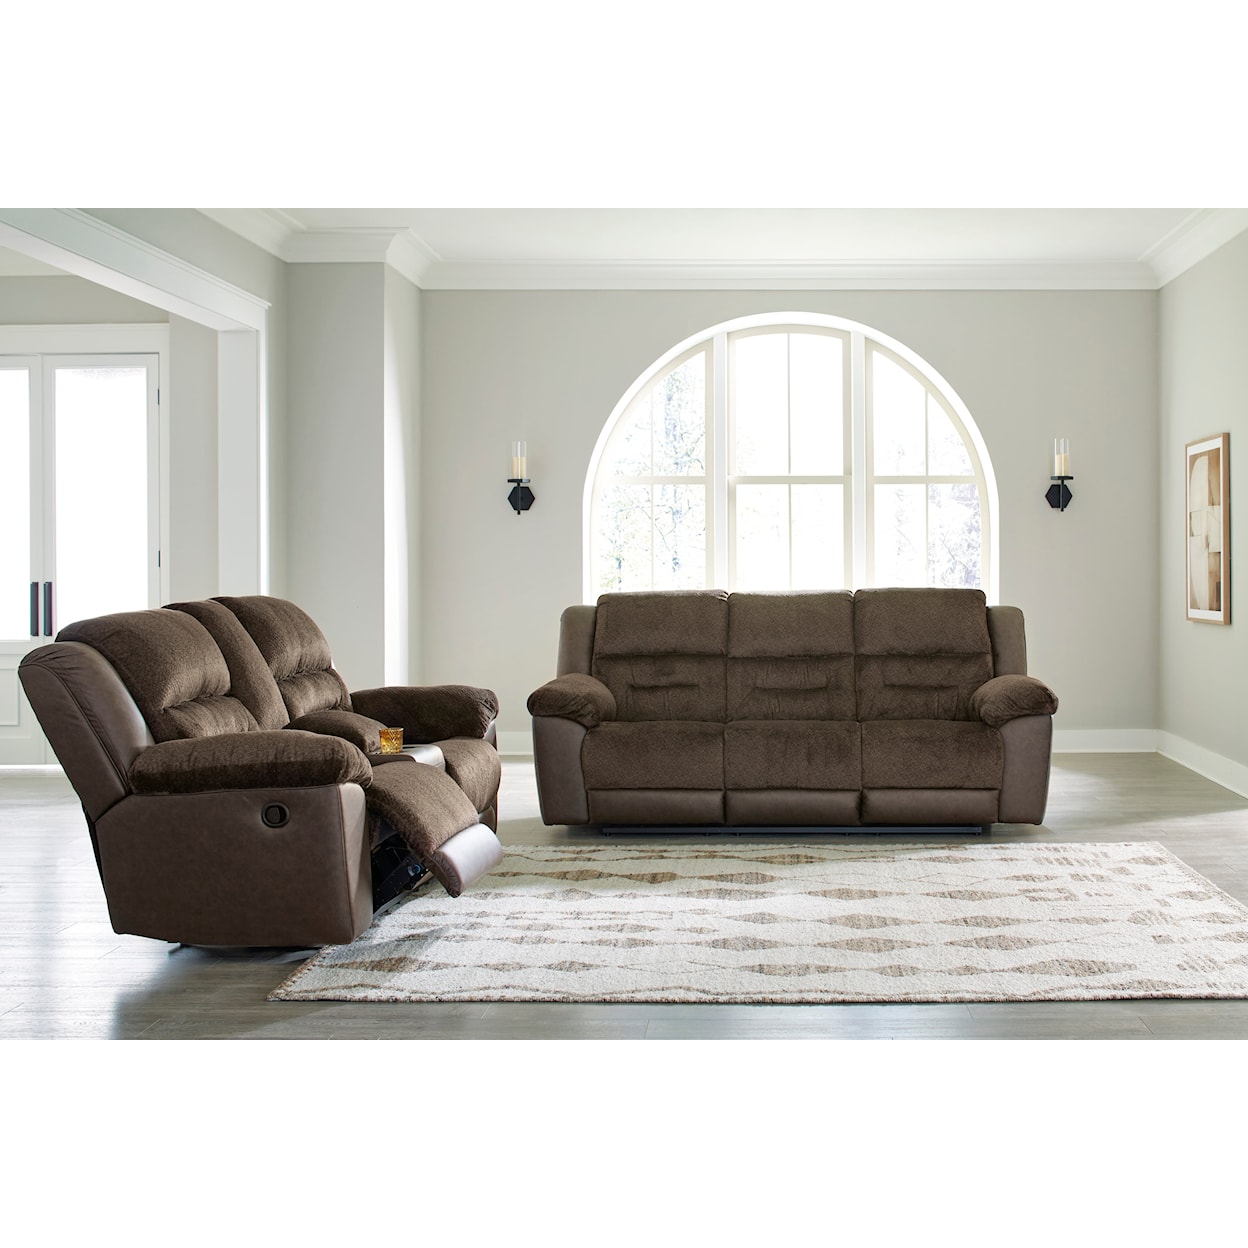 Benchcraft Dorman Living Room Set